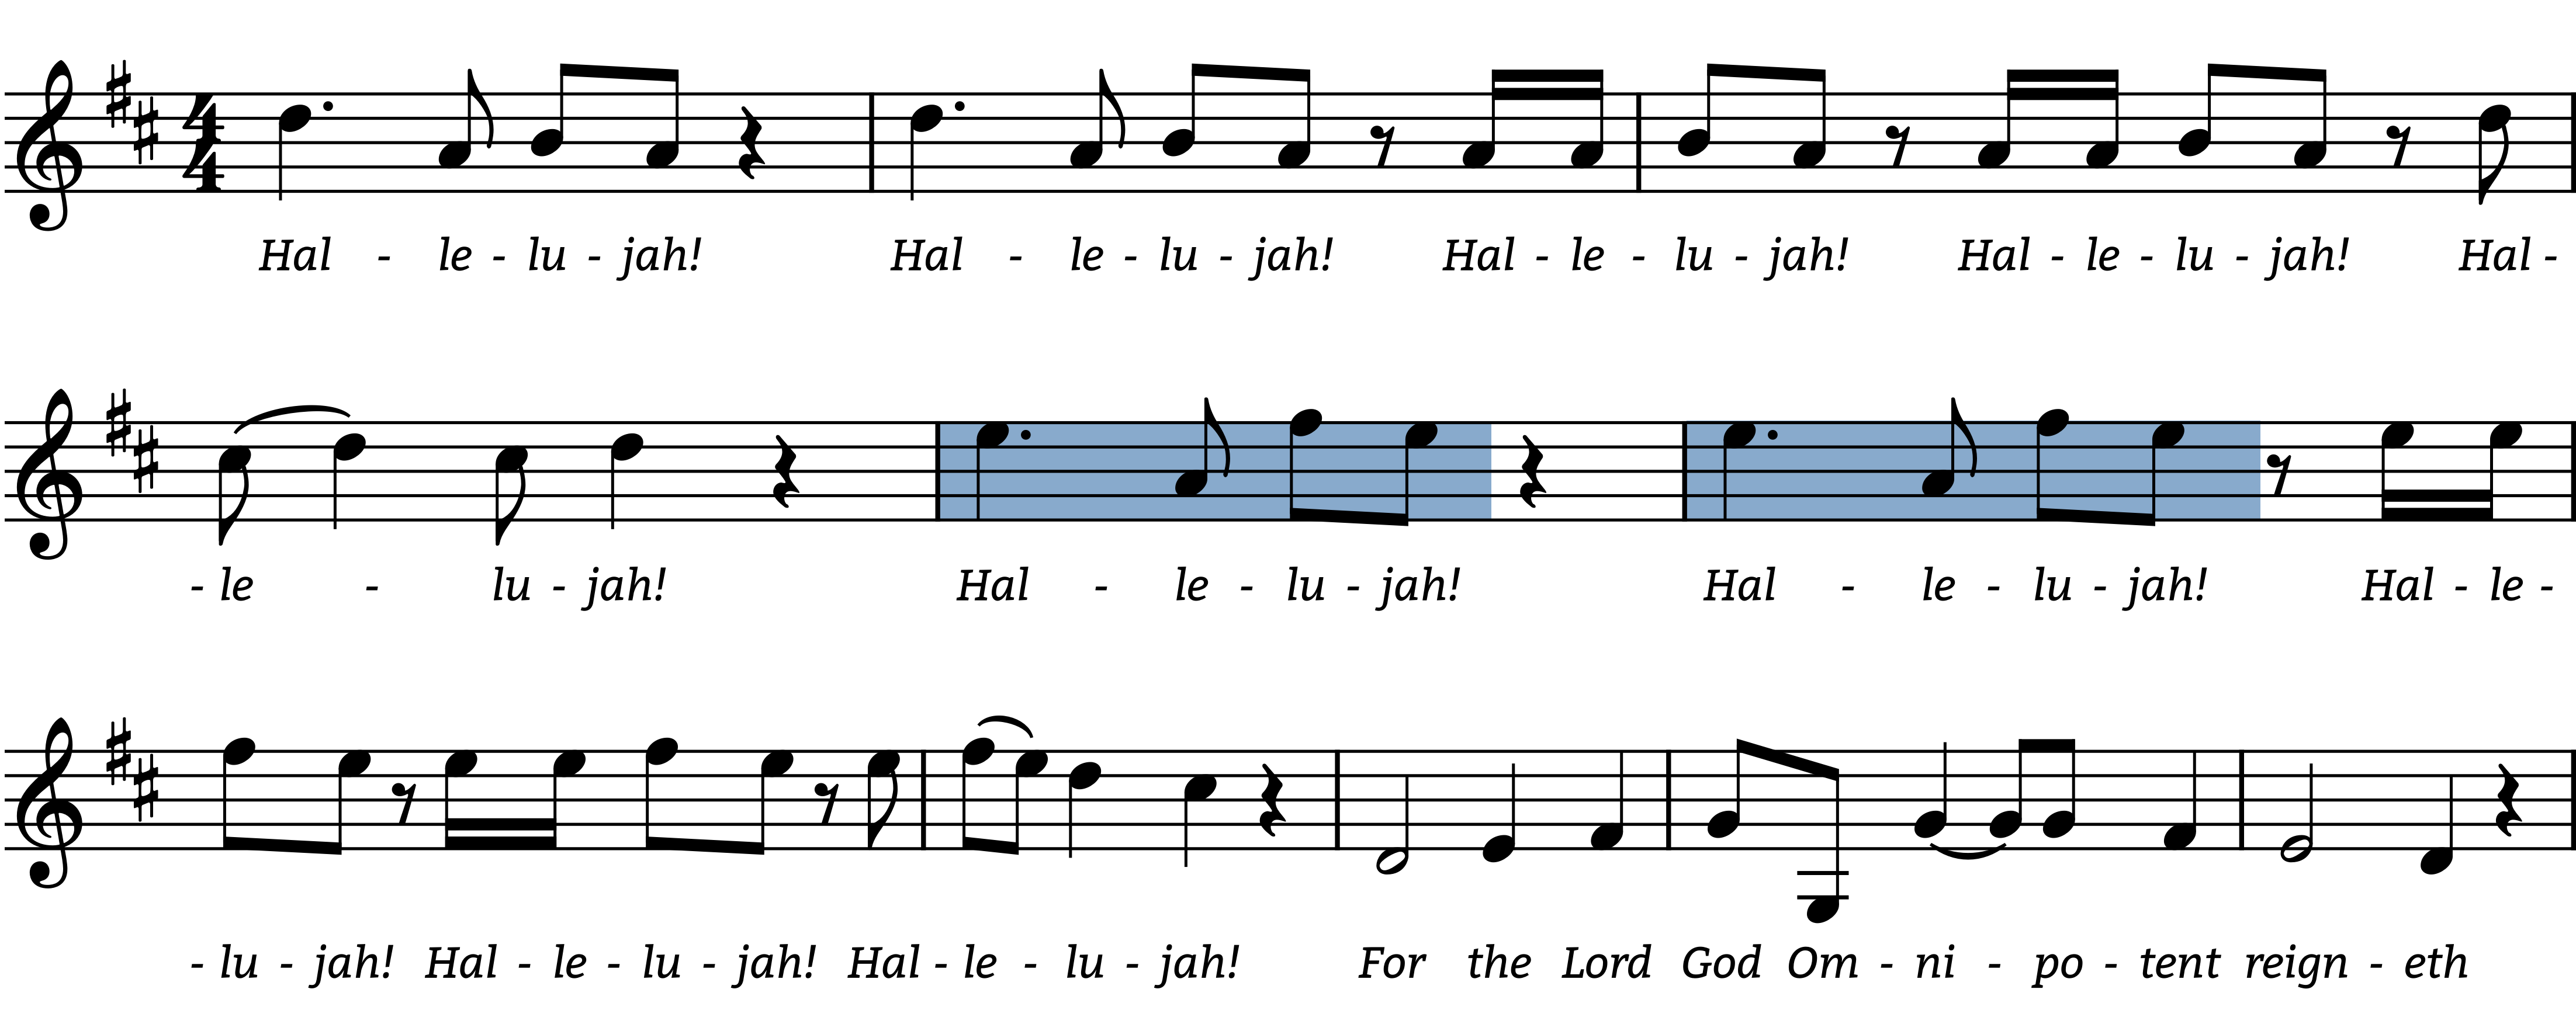 hallelujah-chorus-pendulum auxiliary